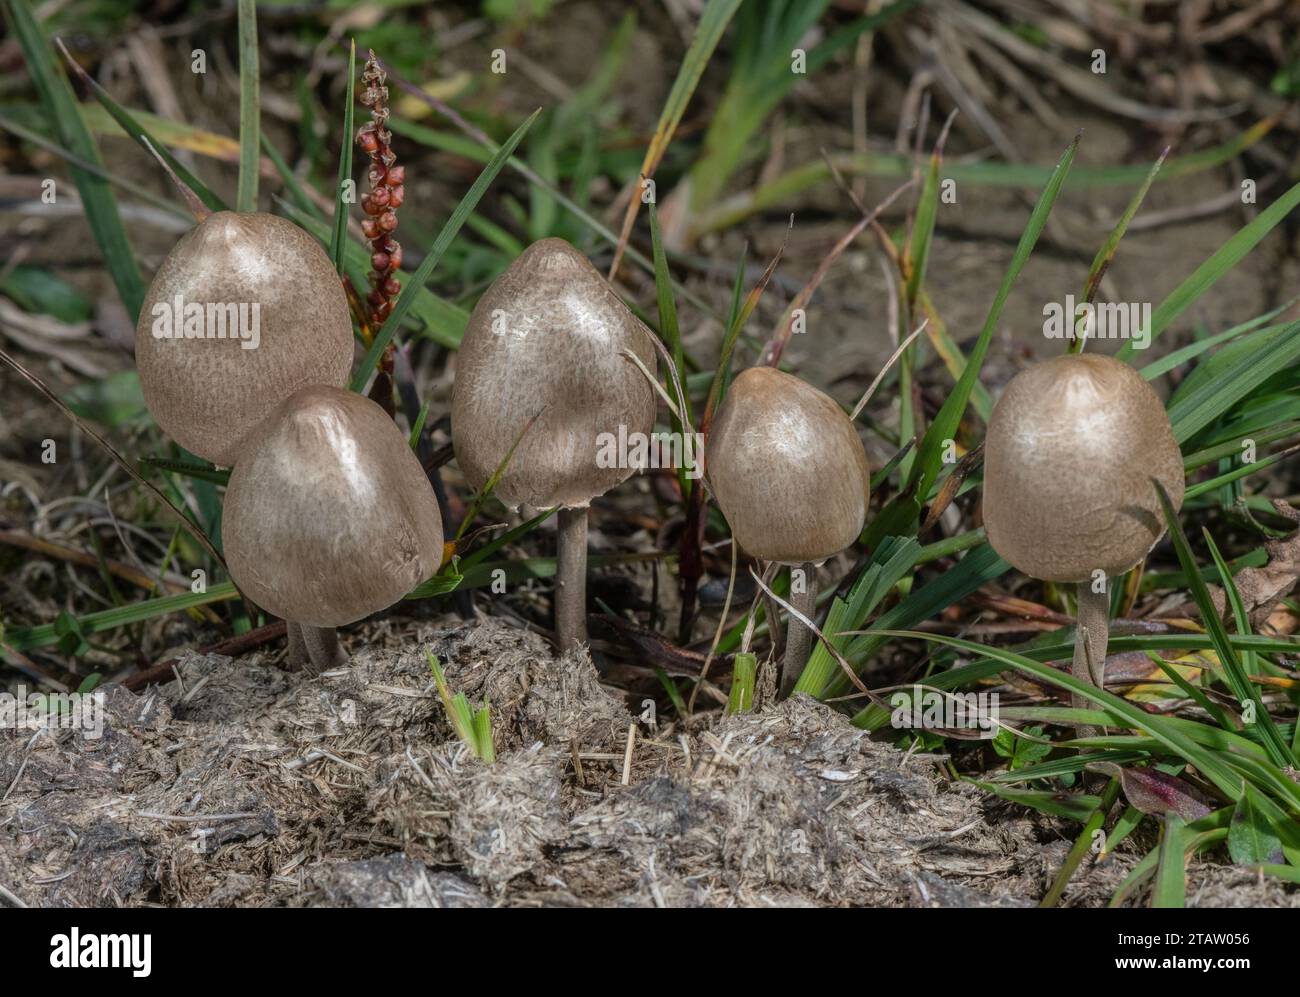 Egghead Mottlegill, Coprinus semiovatus growing on dung. Coprophilous fungi. Stock Photo